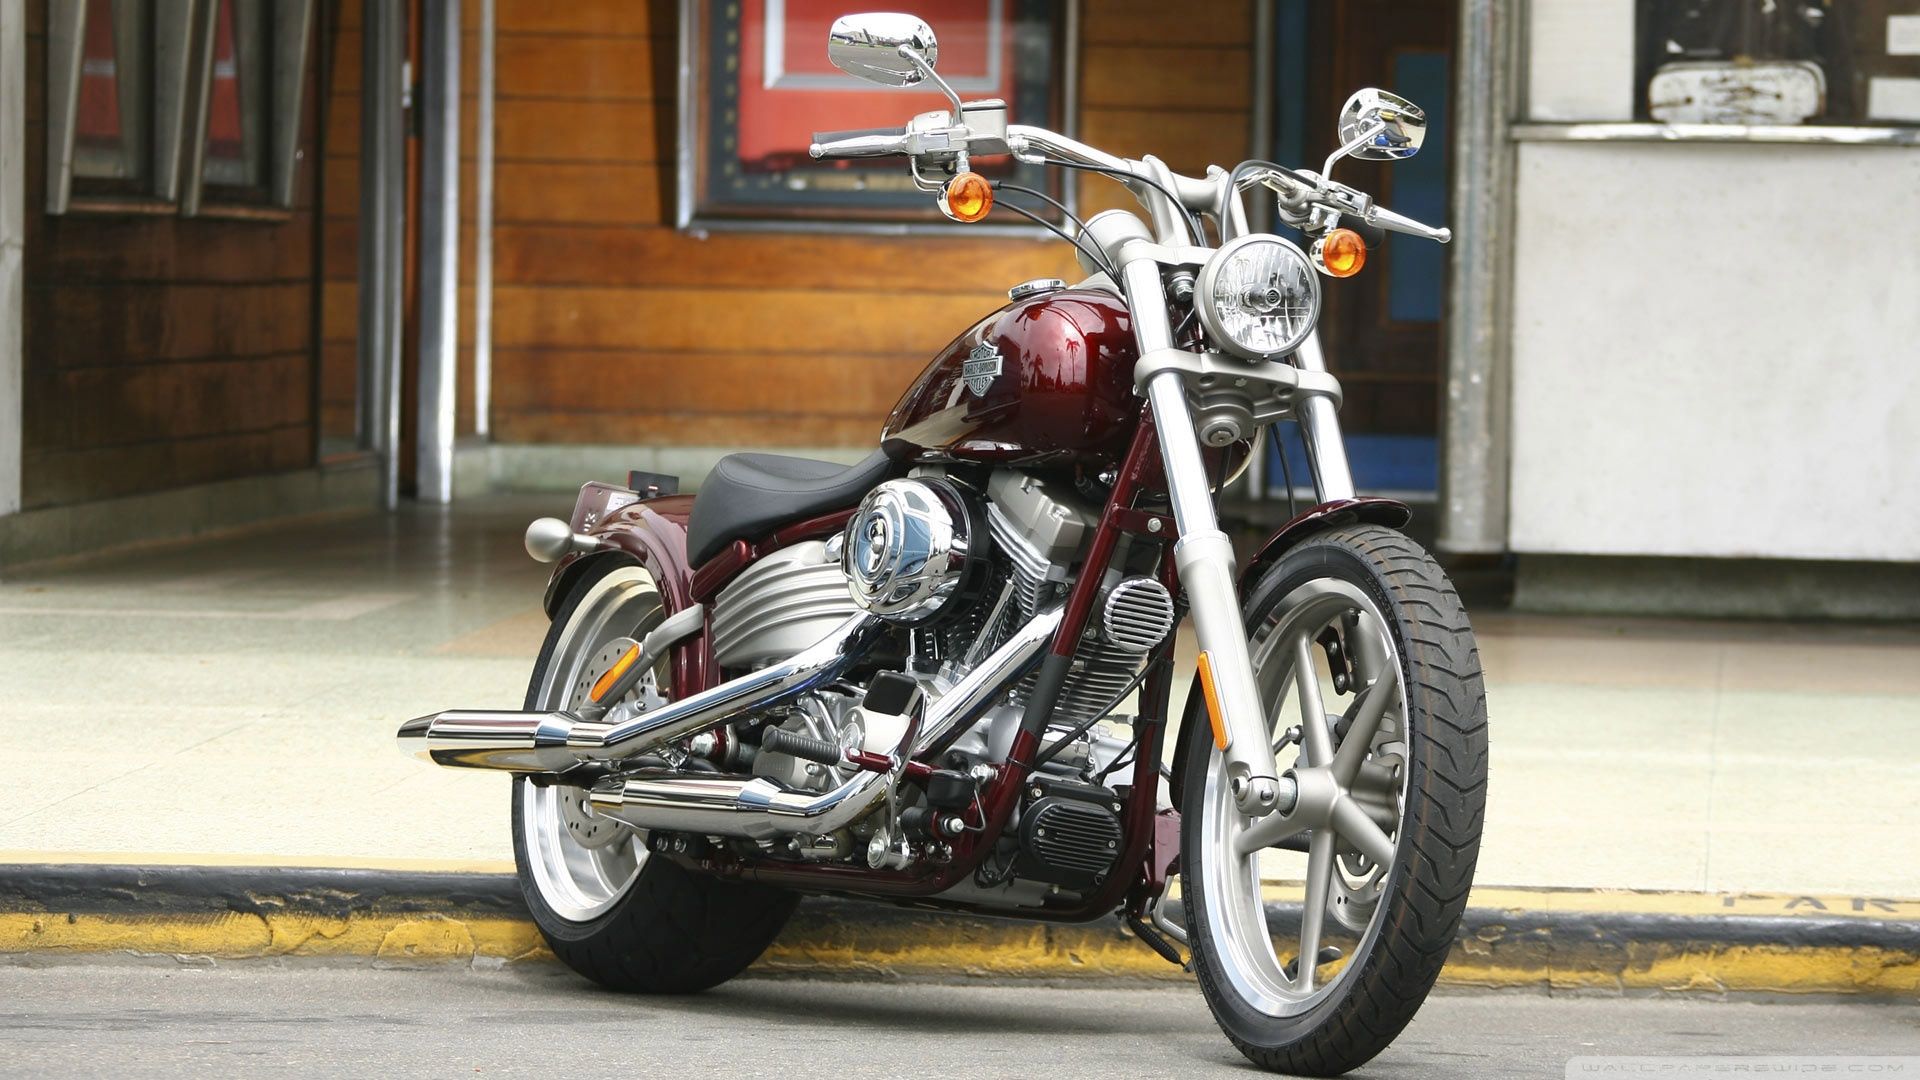 Download Harley Davidson Motorcycle 42 Wallpaper 1920x1080 ...